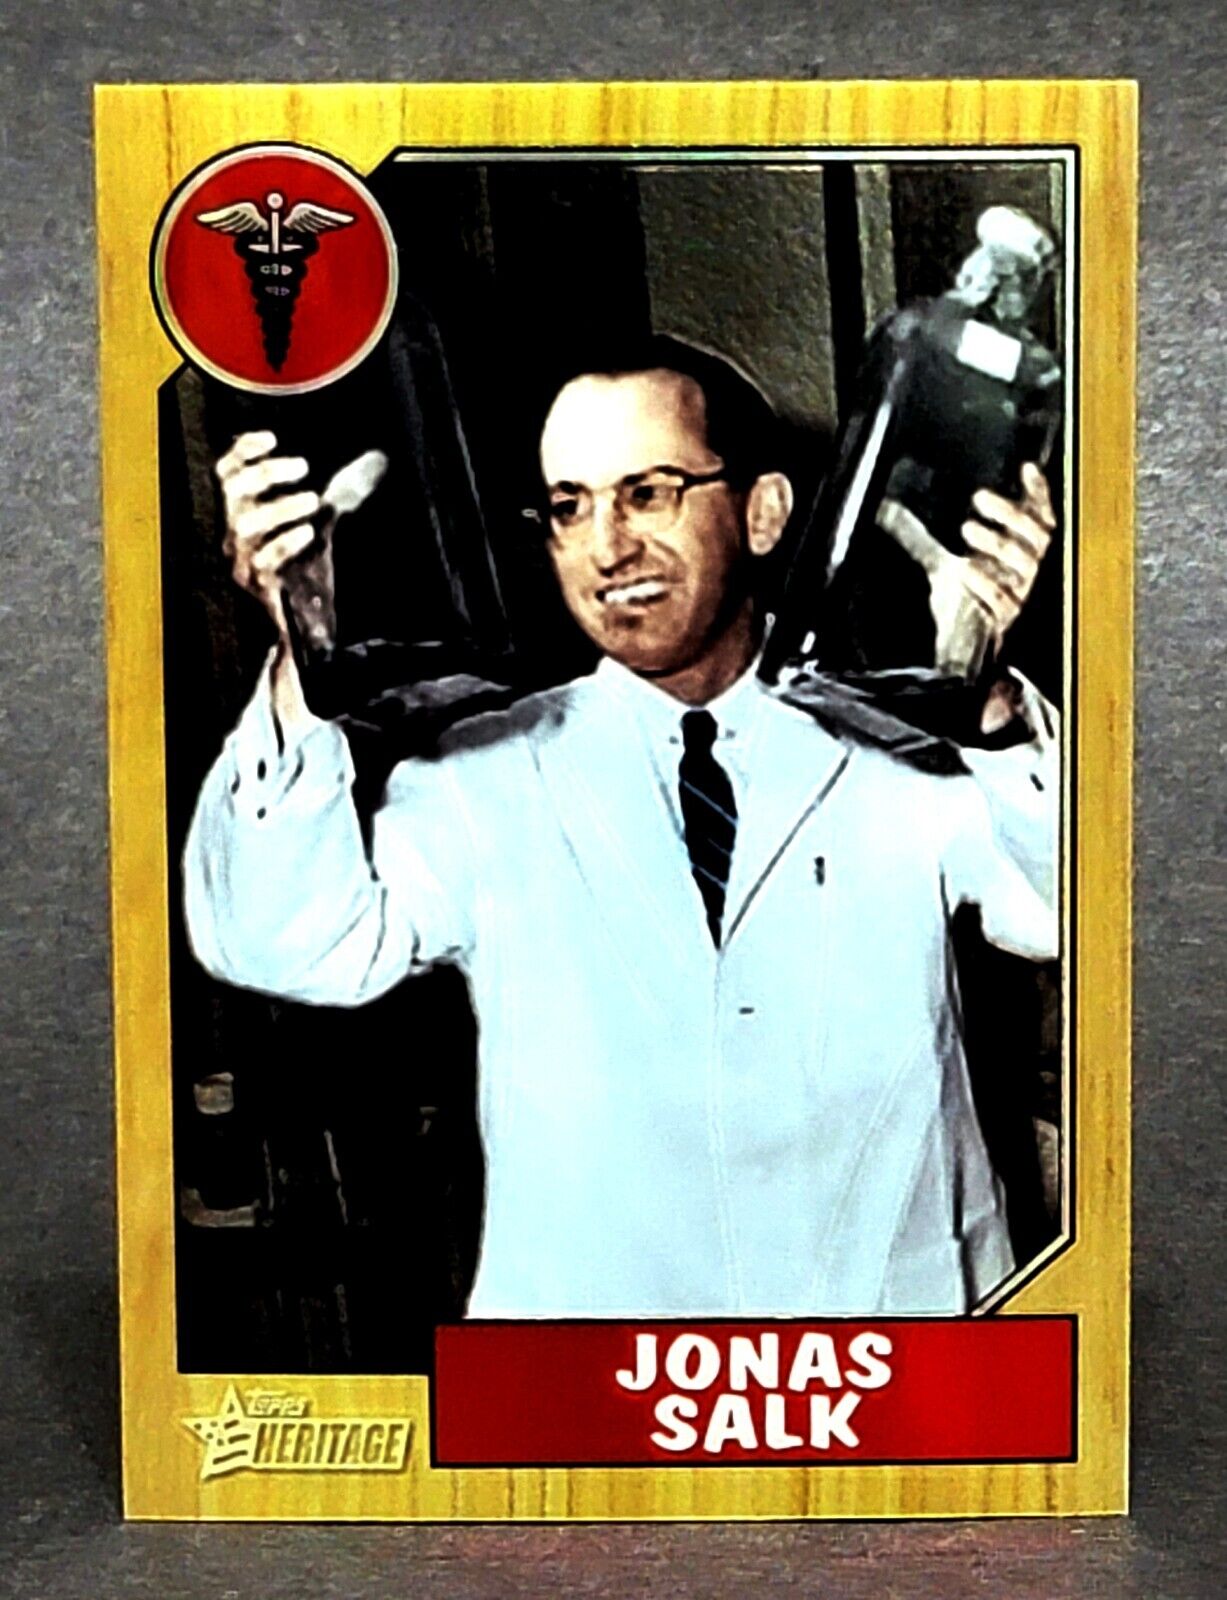 2009 Topps American Heritage Heroes Chrome Refractor #C61 Jonas Salk 27/76